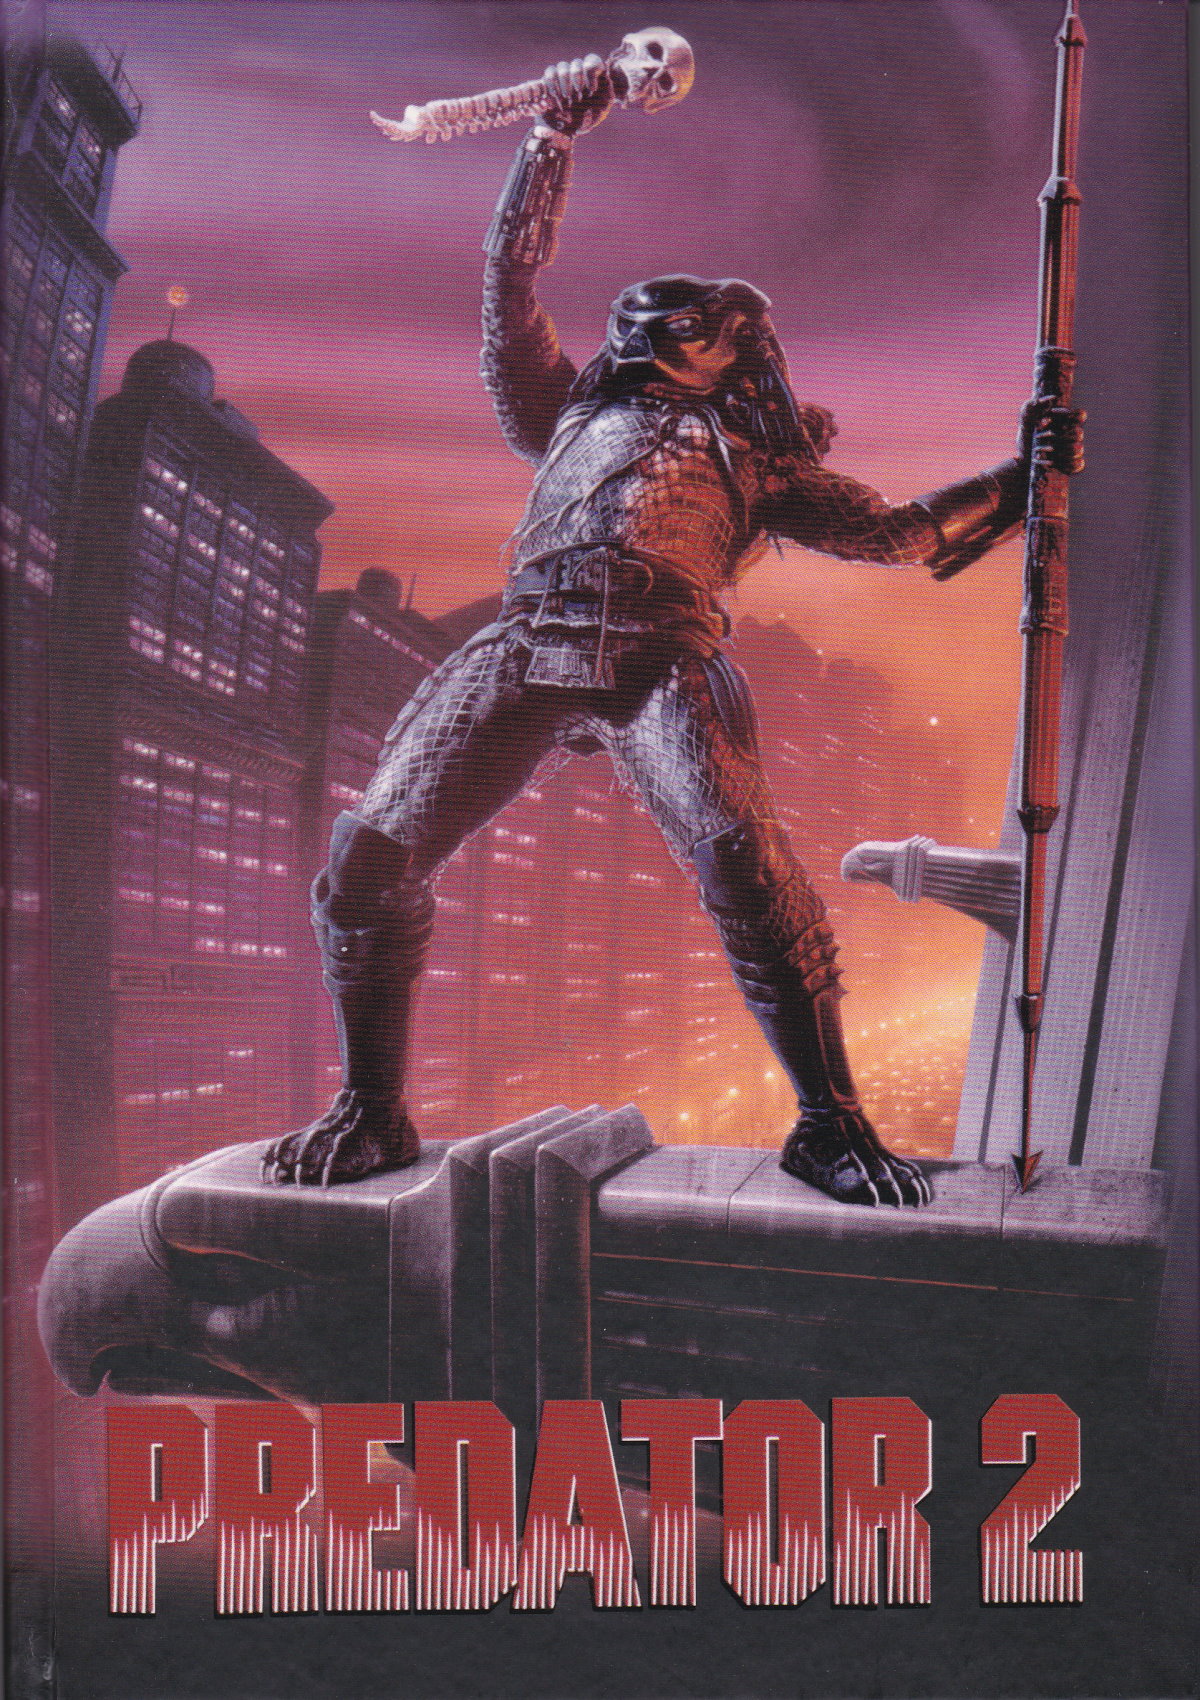 Cover - Predator 2.jpg